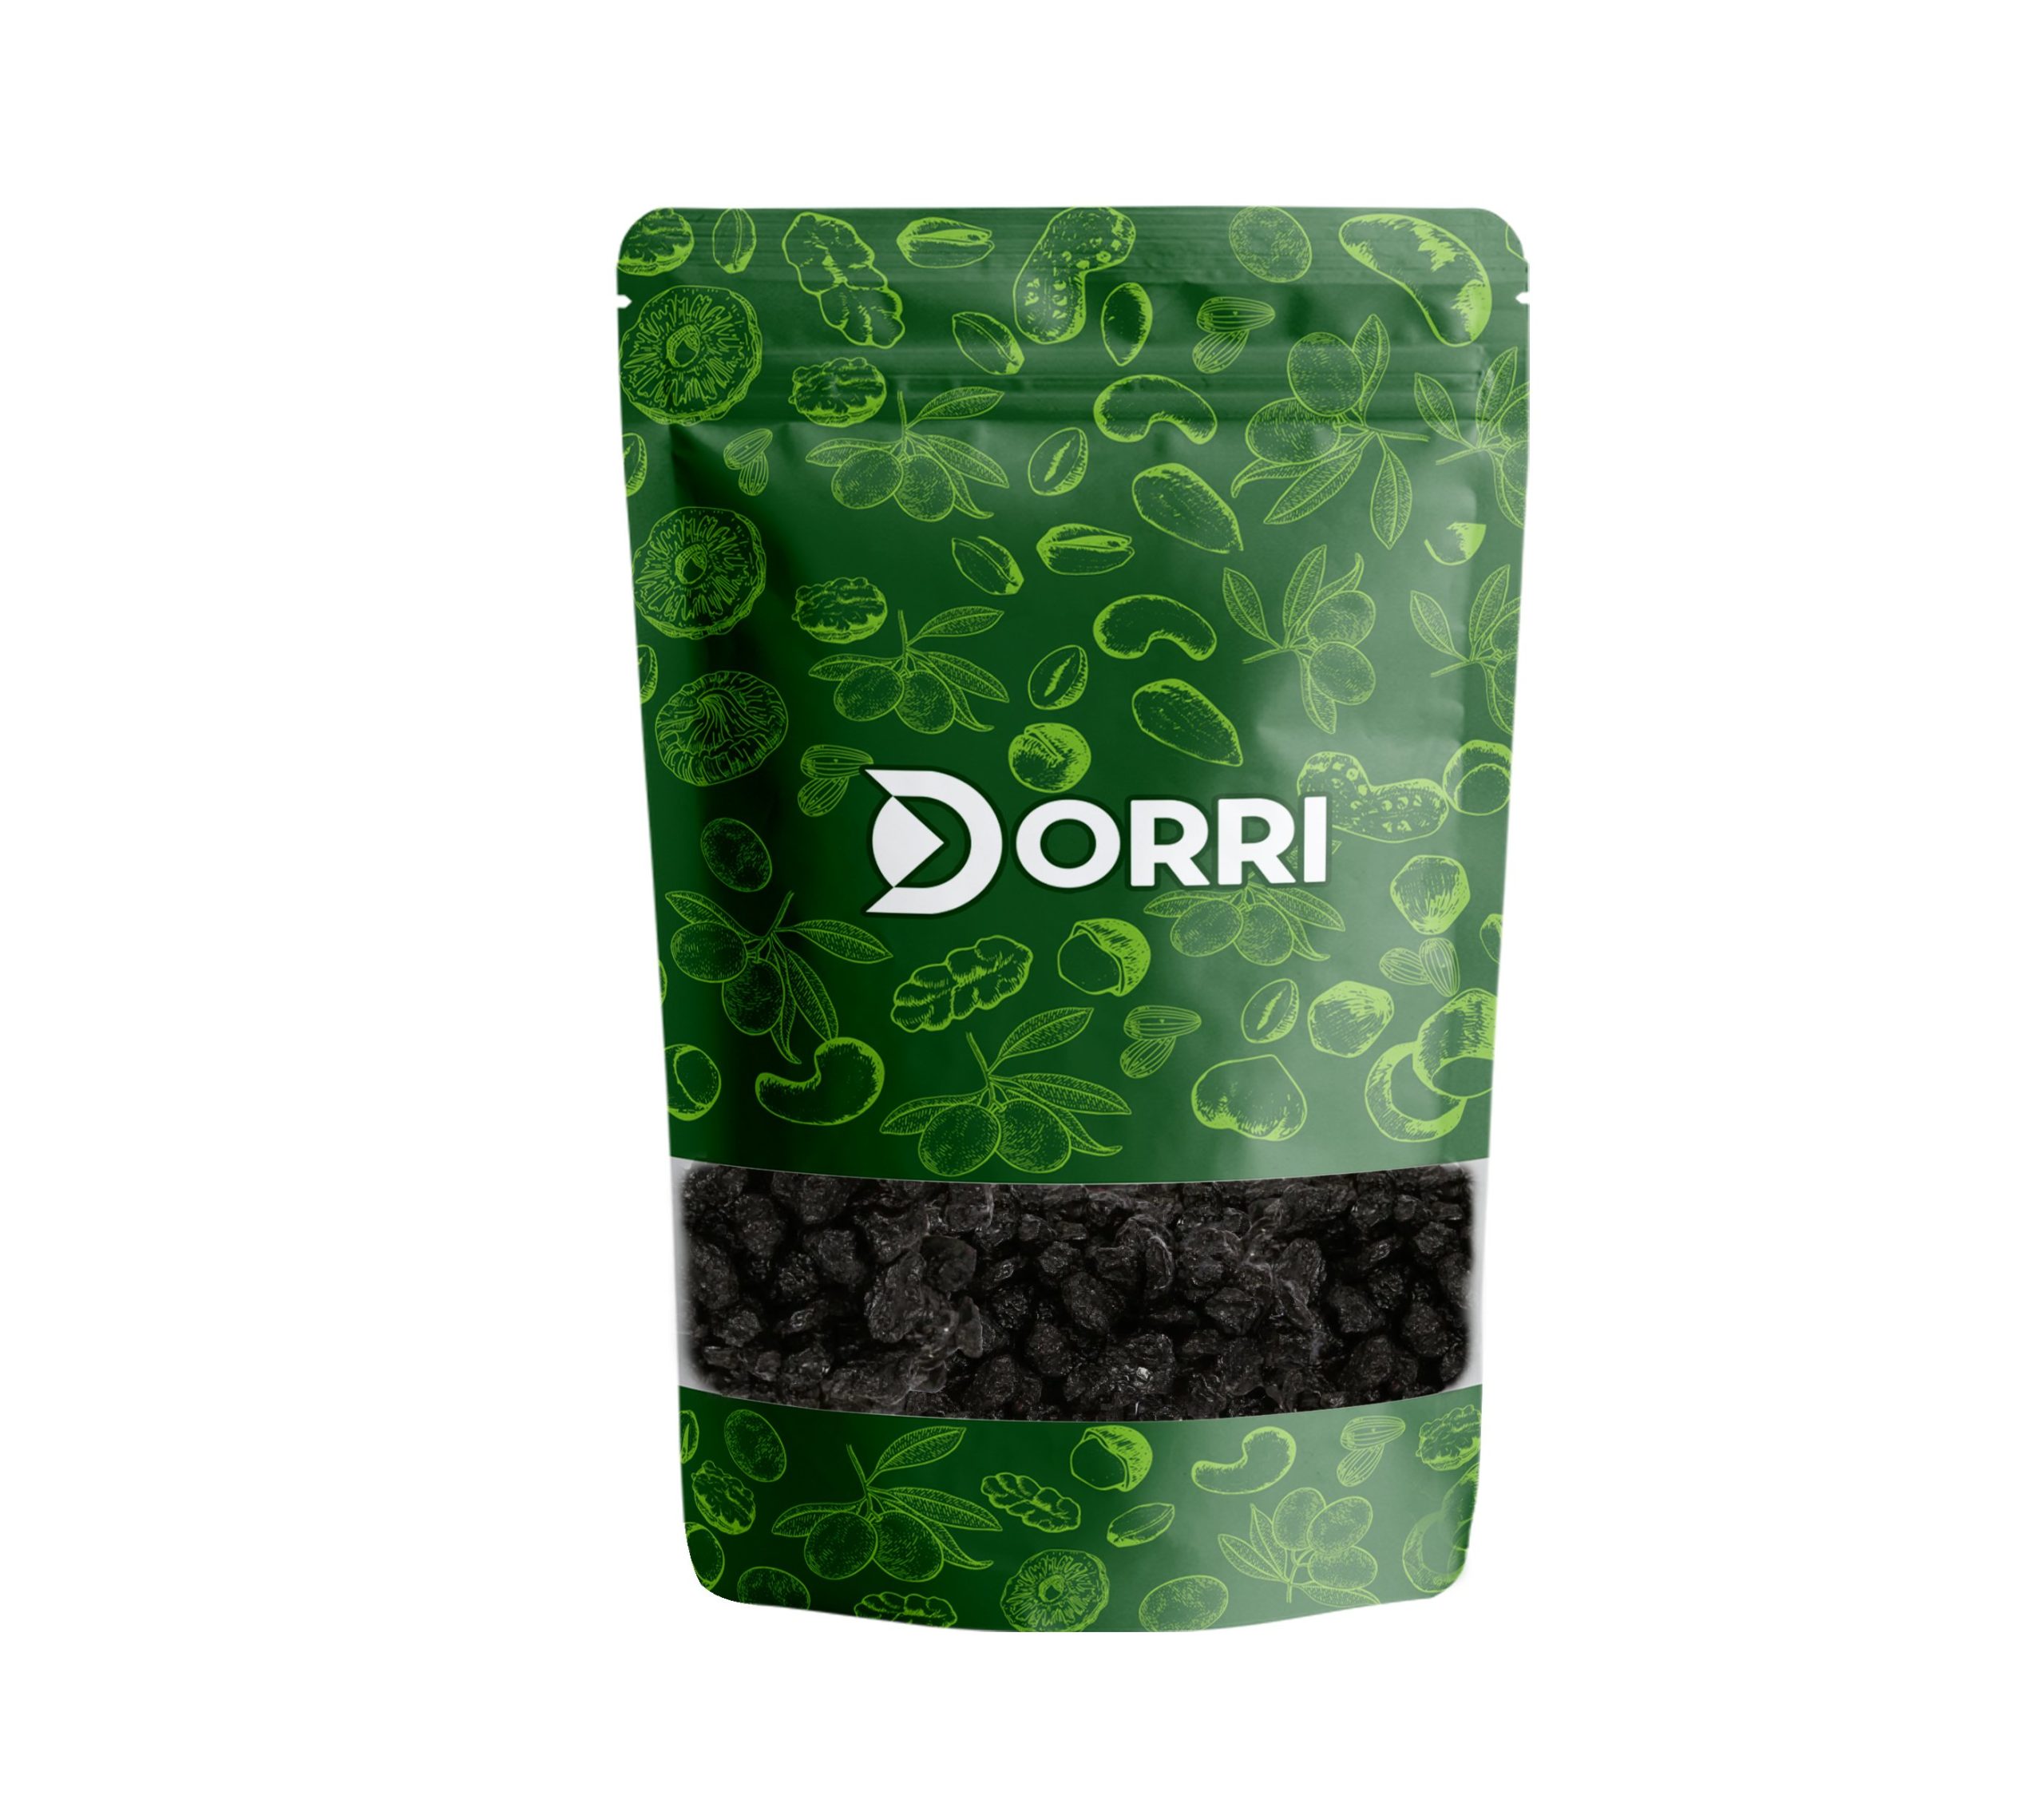 Dorri - Dried Blueberries